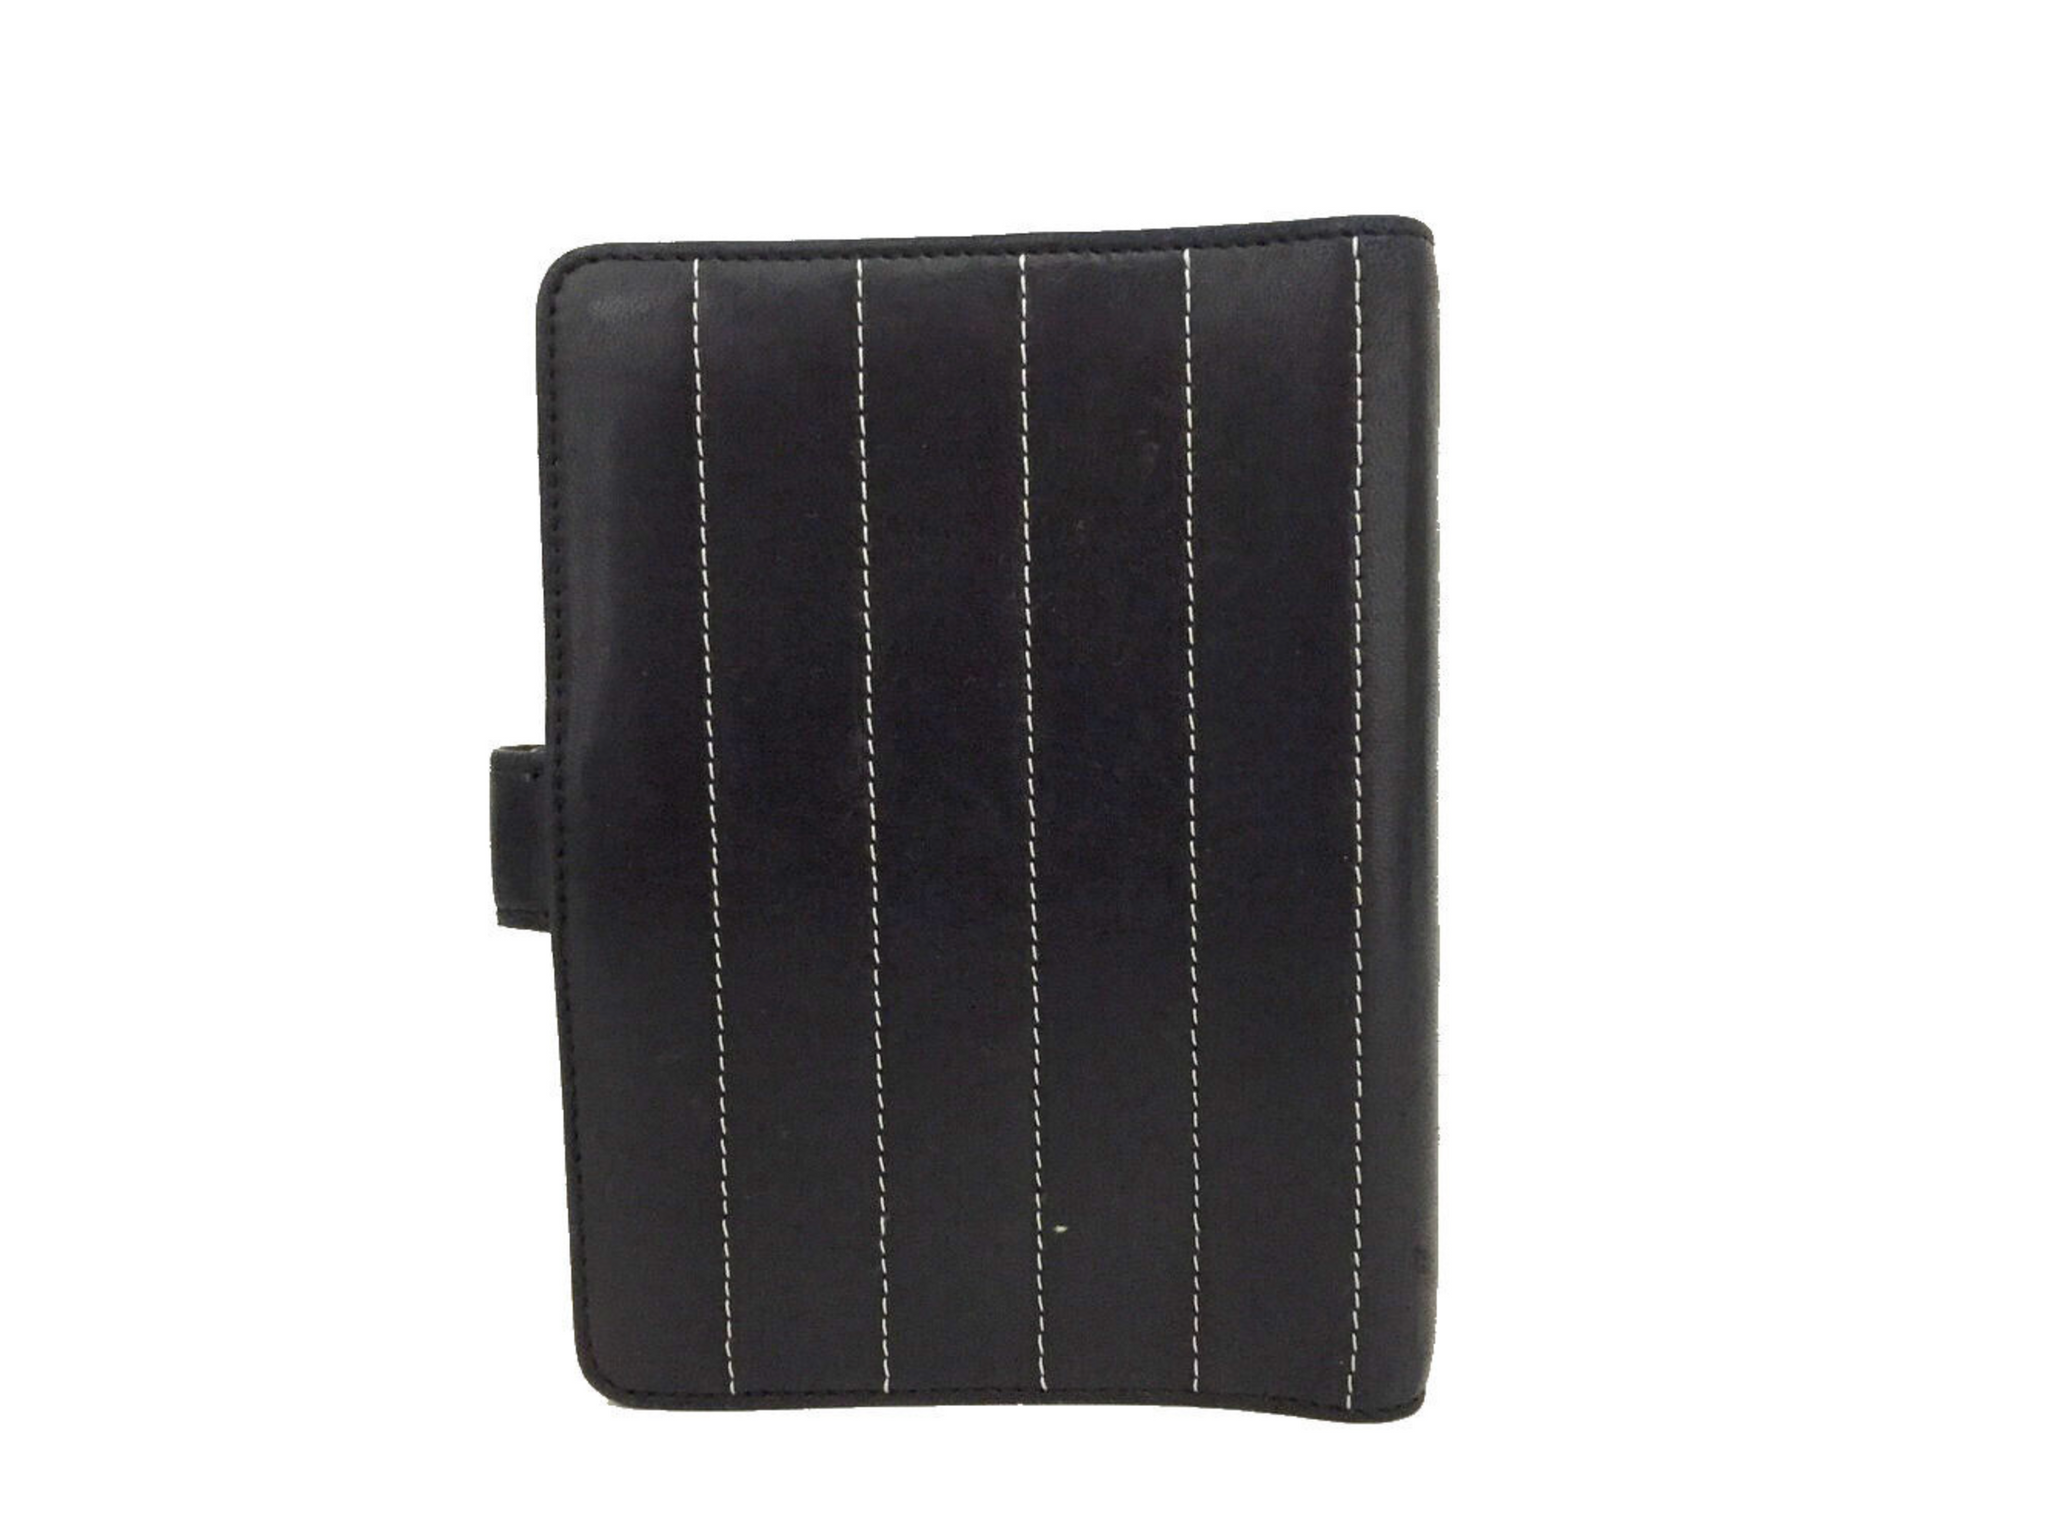 Preloved CHANEL Black Leather Agenda Notebook Cover 10398160 030123